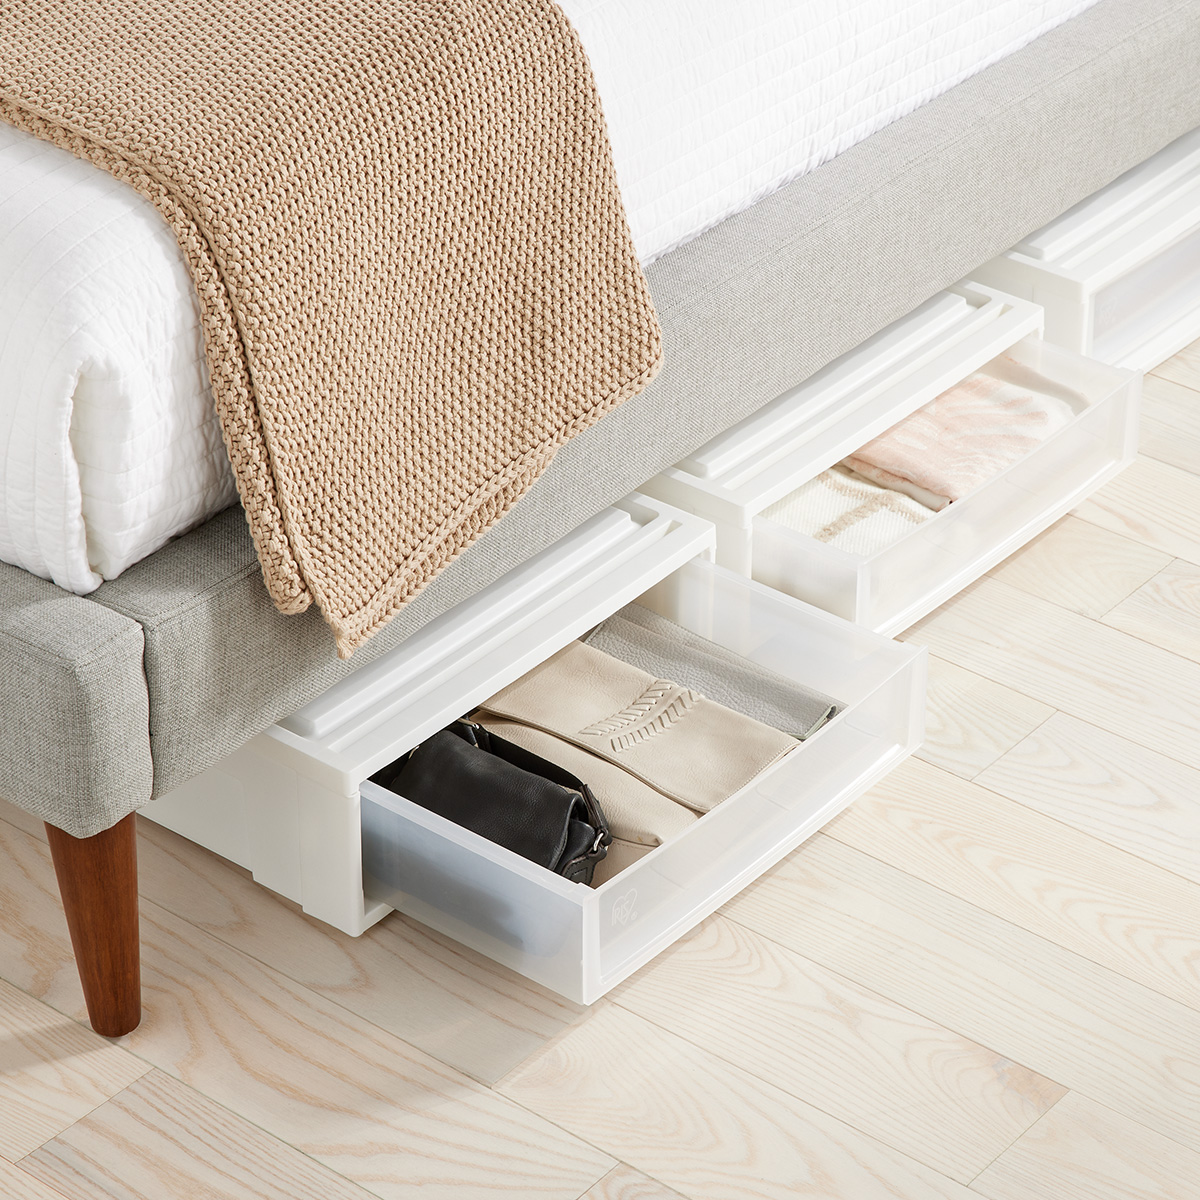 Slide Out Under Desk Drawers 6 Compartments Clothes Storage Bin For Bedroom  Dorms Damage Free